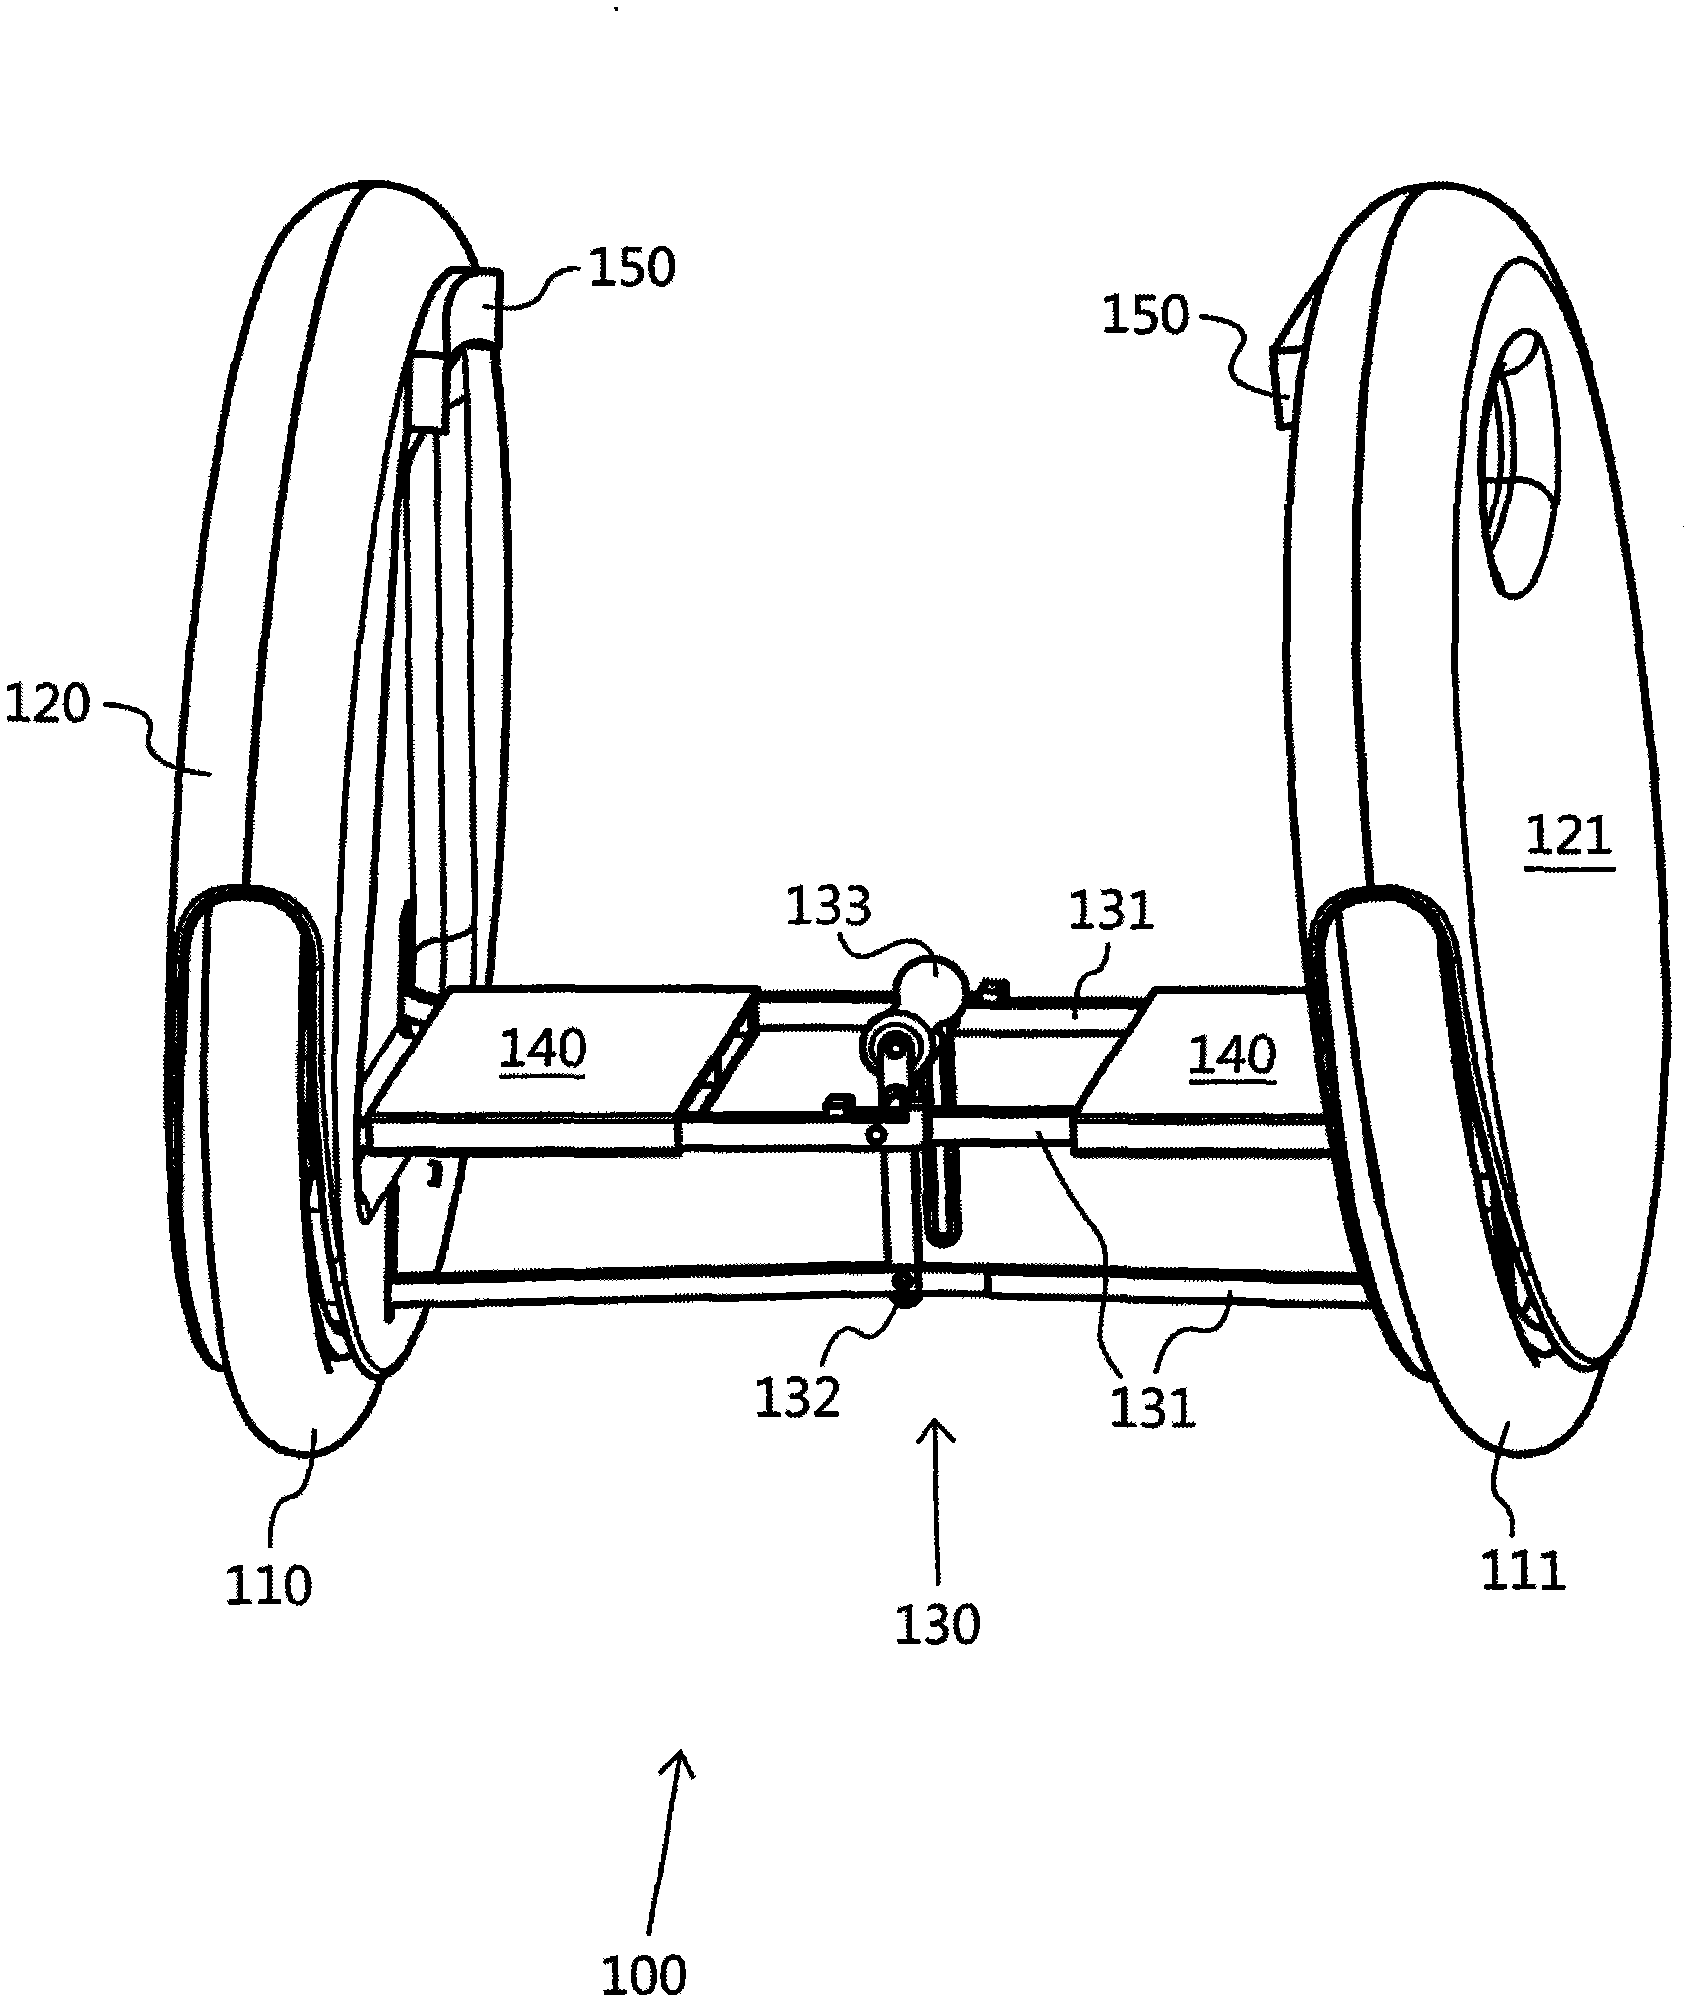 Two-wheeled self-balancing electrombile